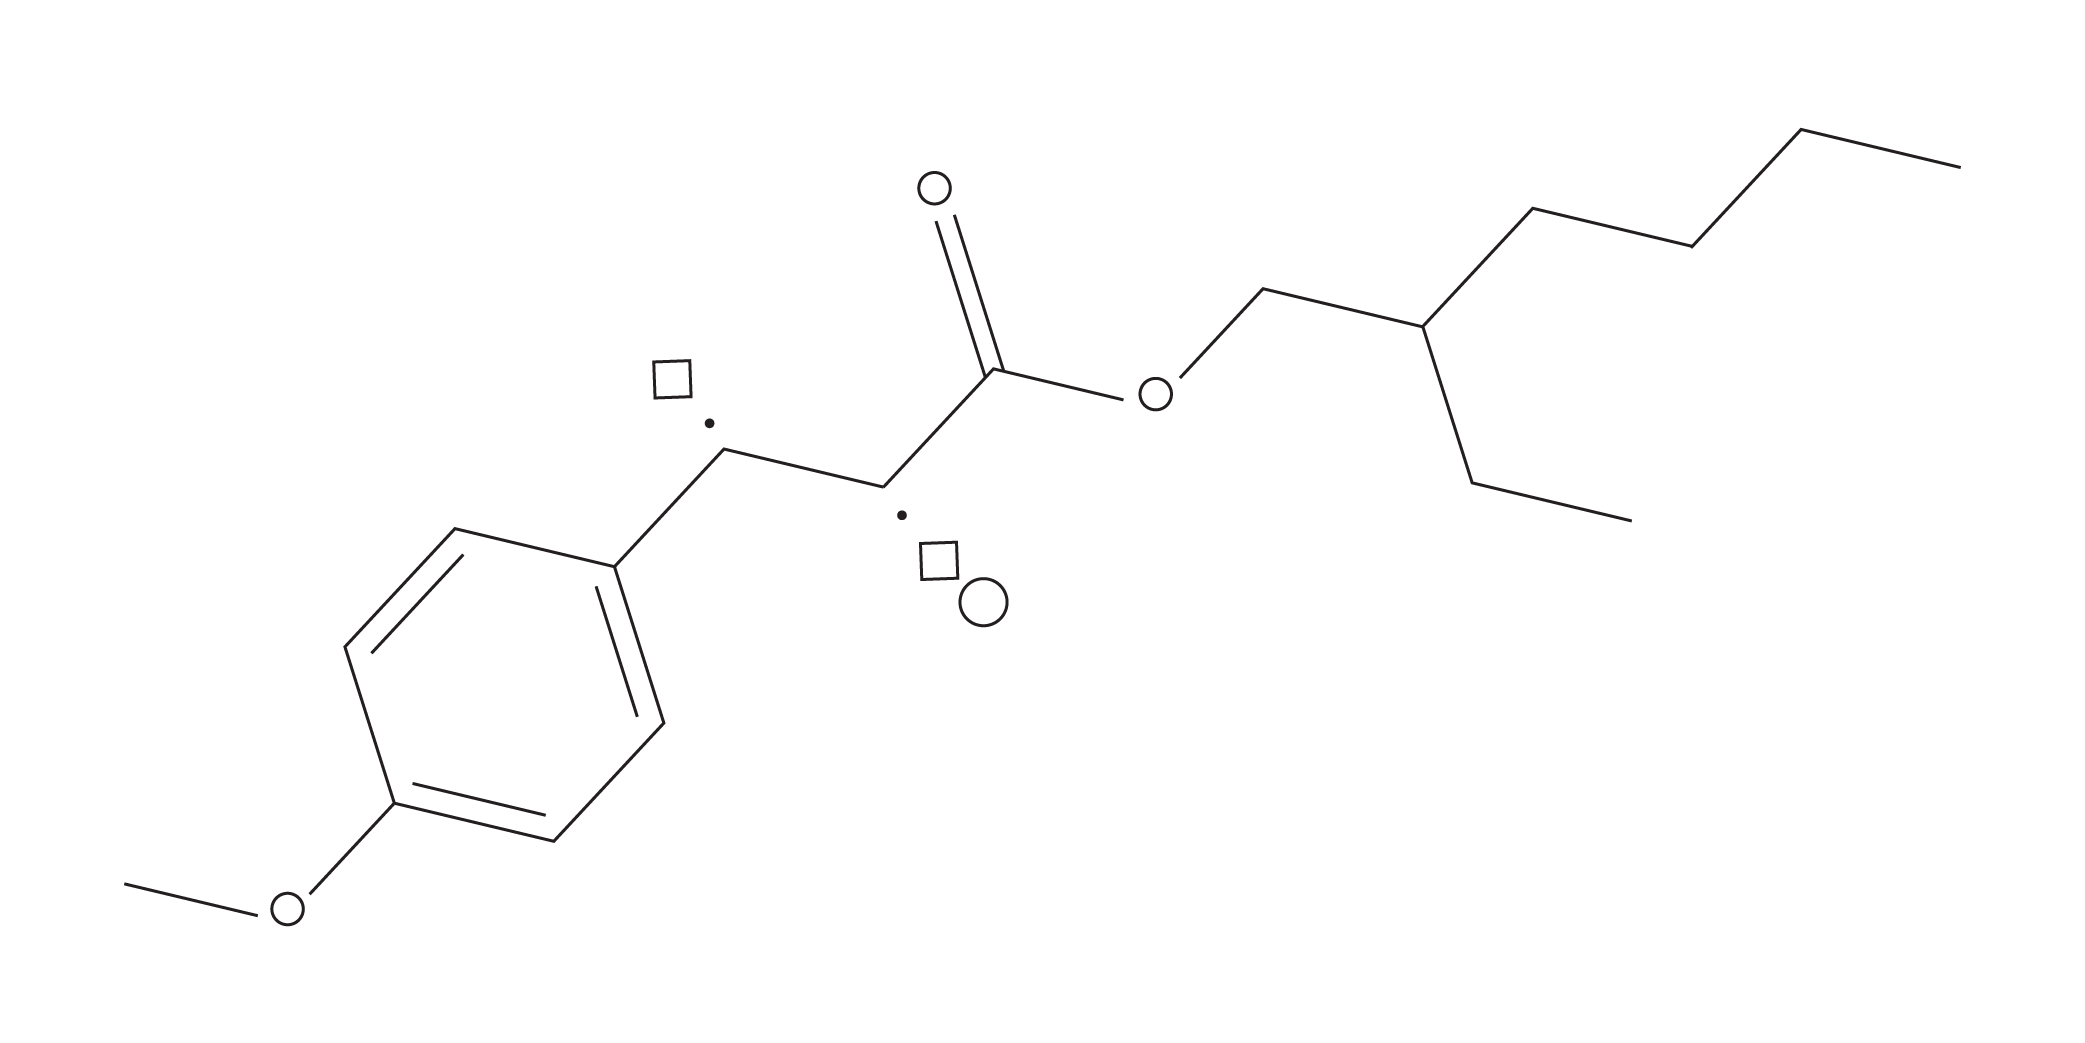 Ethylhexyl Methoxycinnamate (Octinoxate) Octocrylene